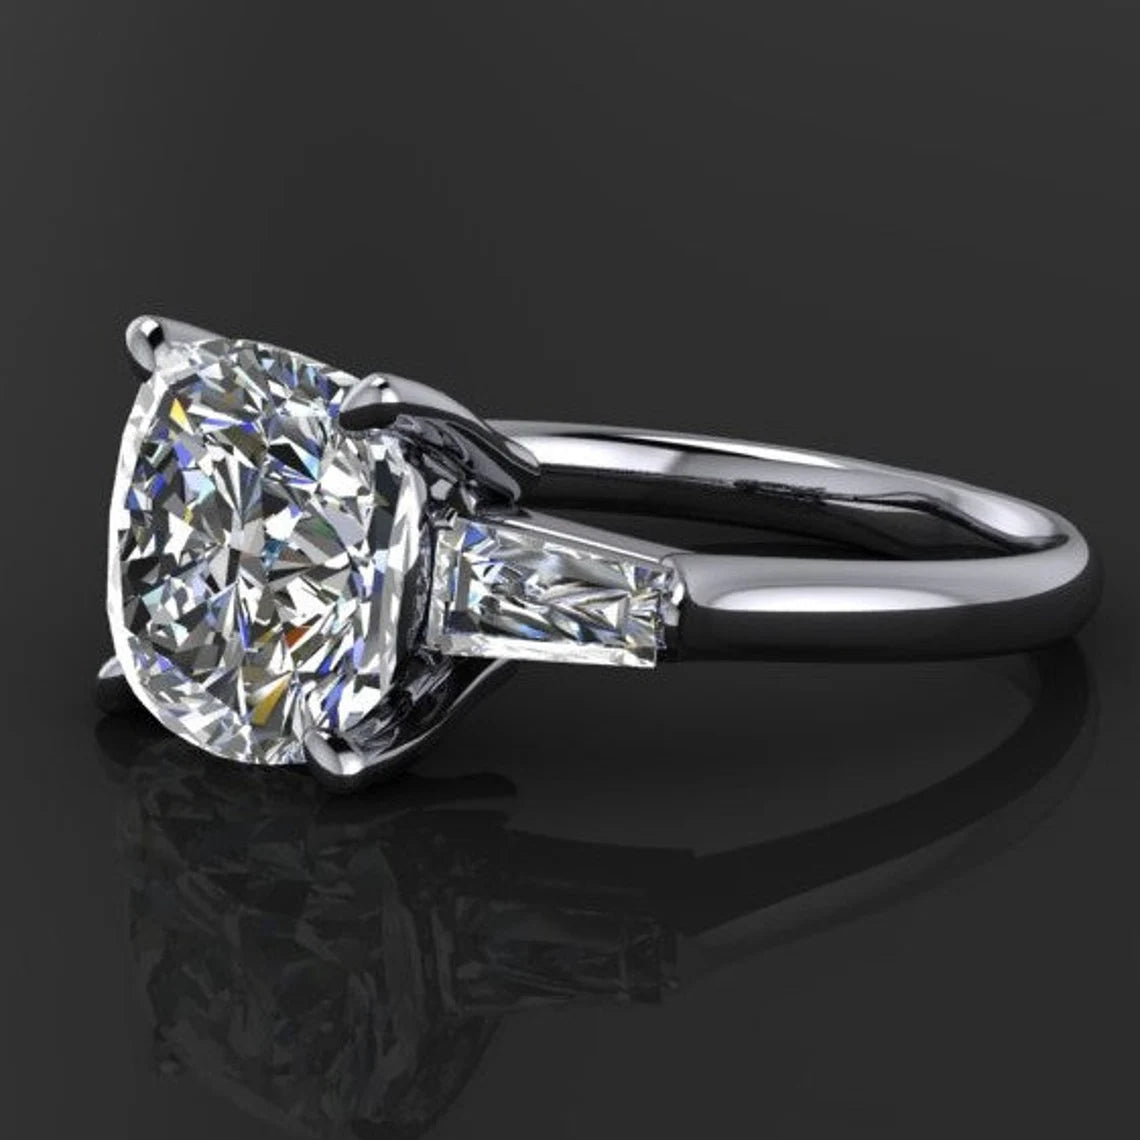 custom laurel ring – 3 carat cushion cut NEO moissanite engagement ring - J Hollywood Designs